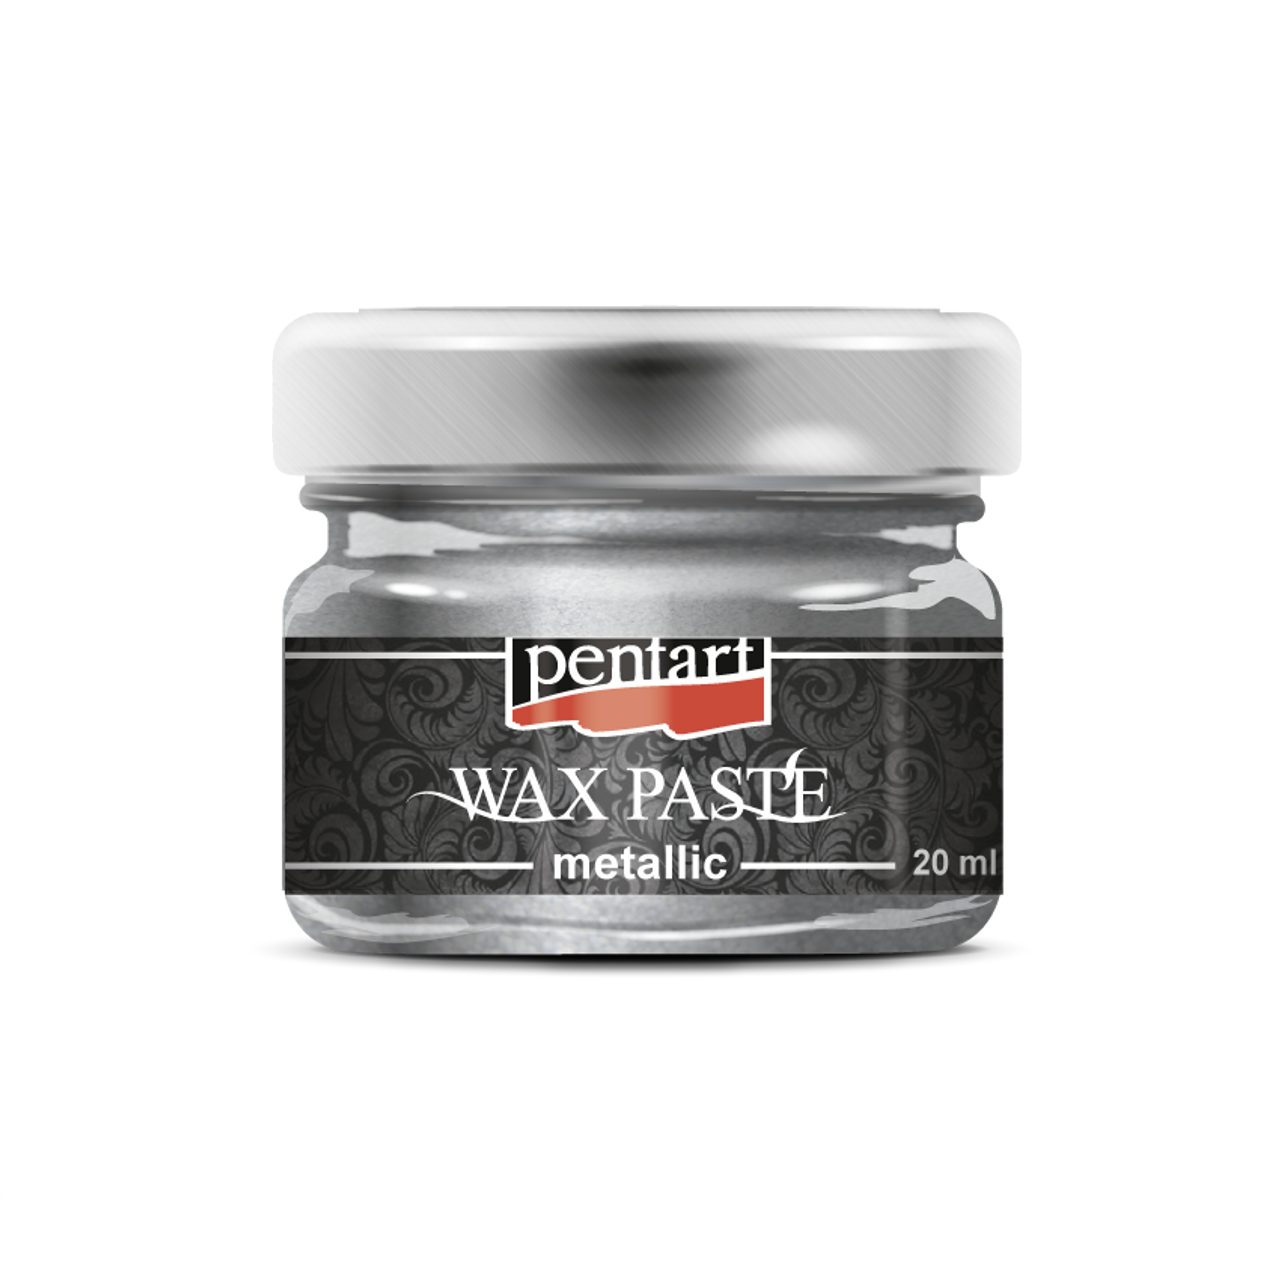 wax paste